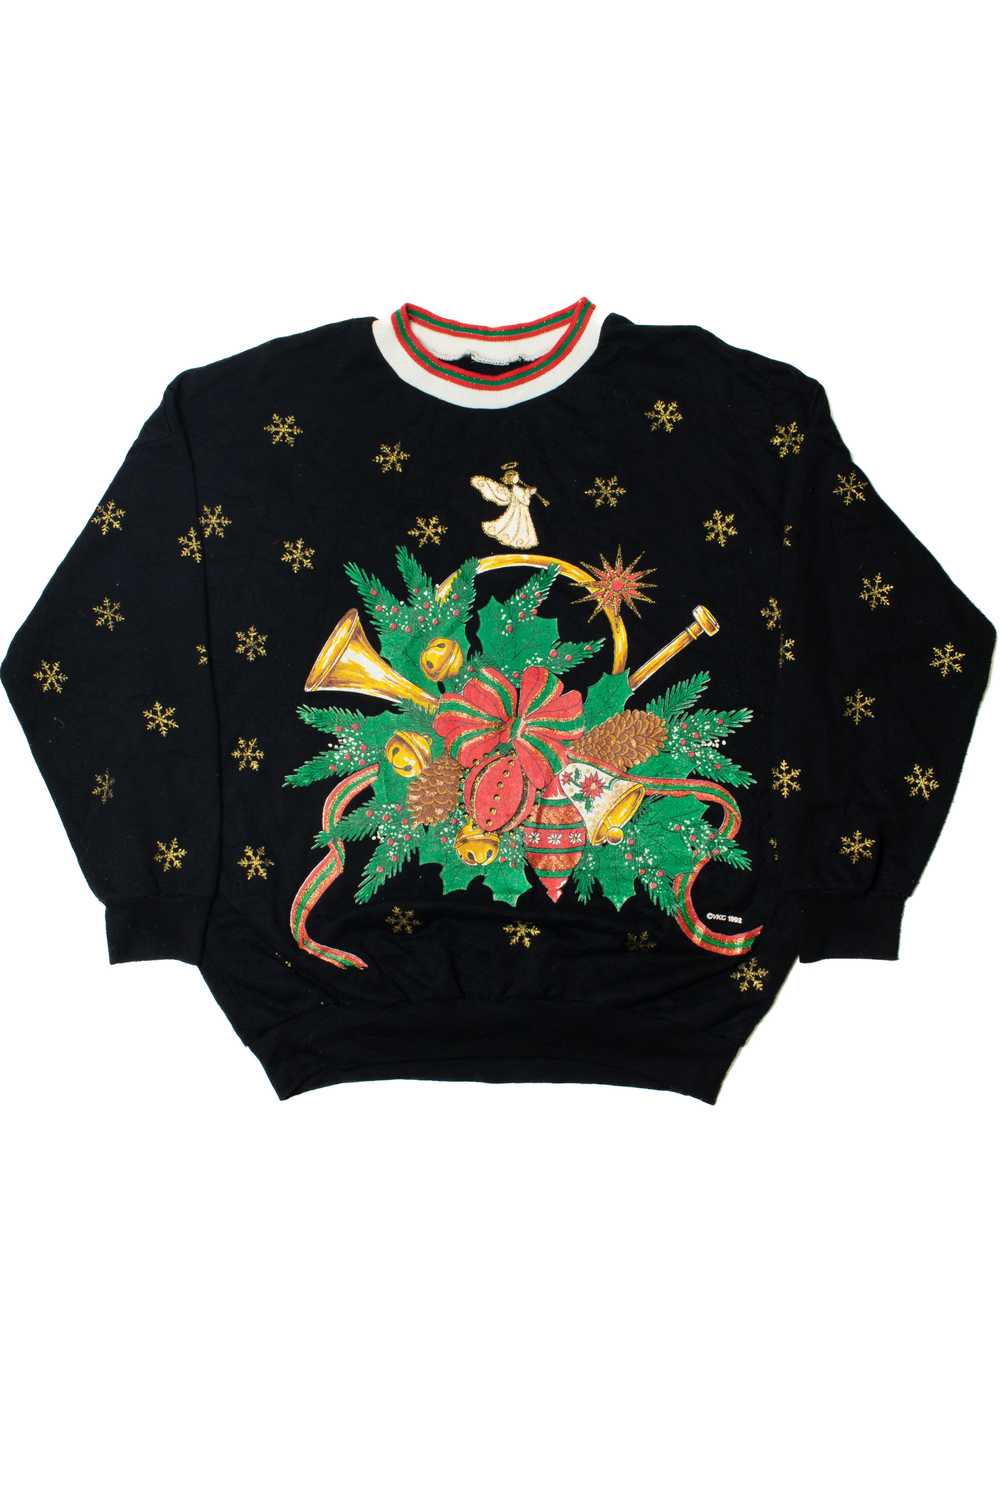 Festive Decor Ugly Christmas Sweatshirt 61614 - image 3